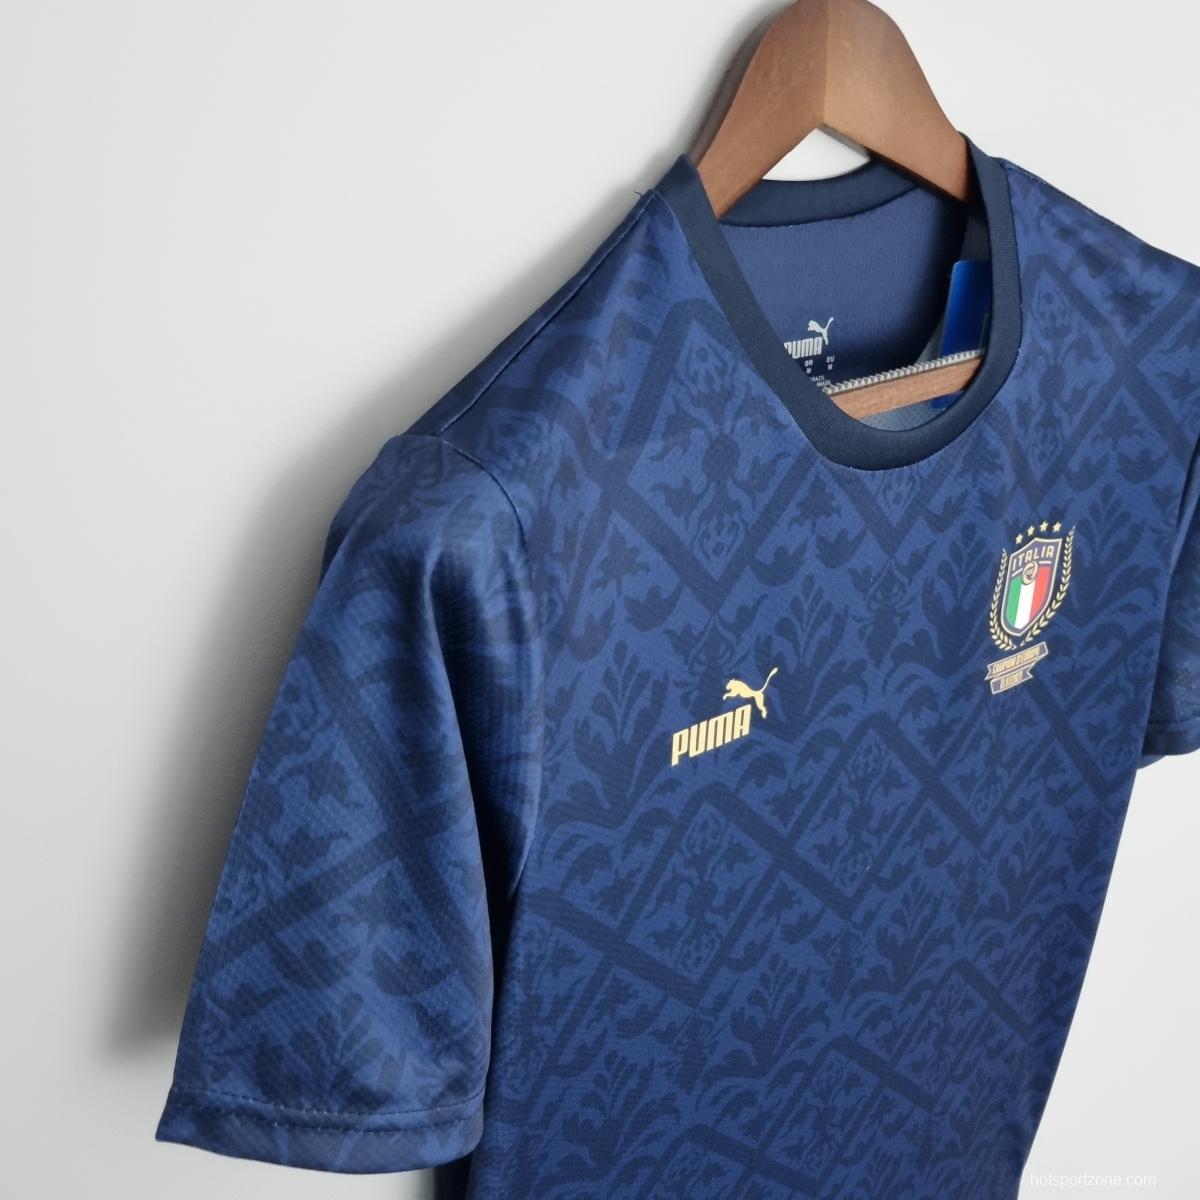 2022 Italian European Championship Special Edition Royal Blue Soccer Jersey